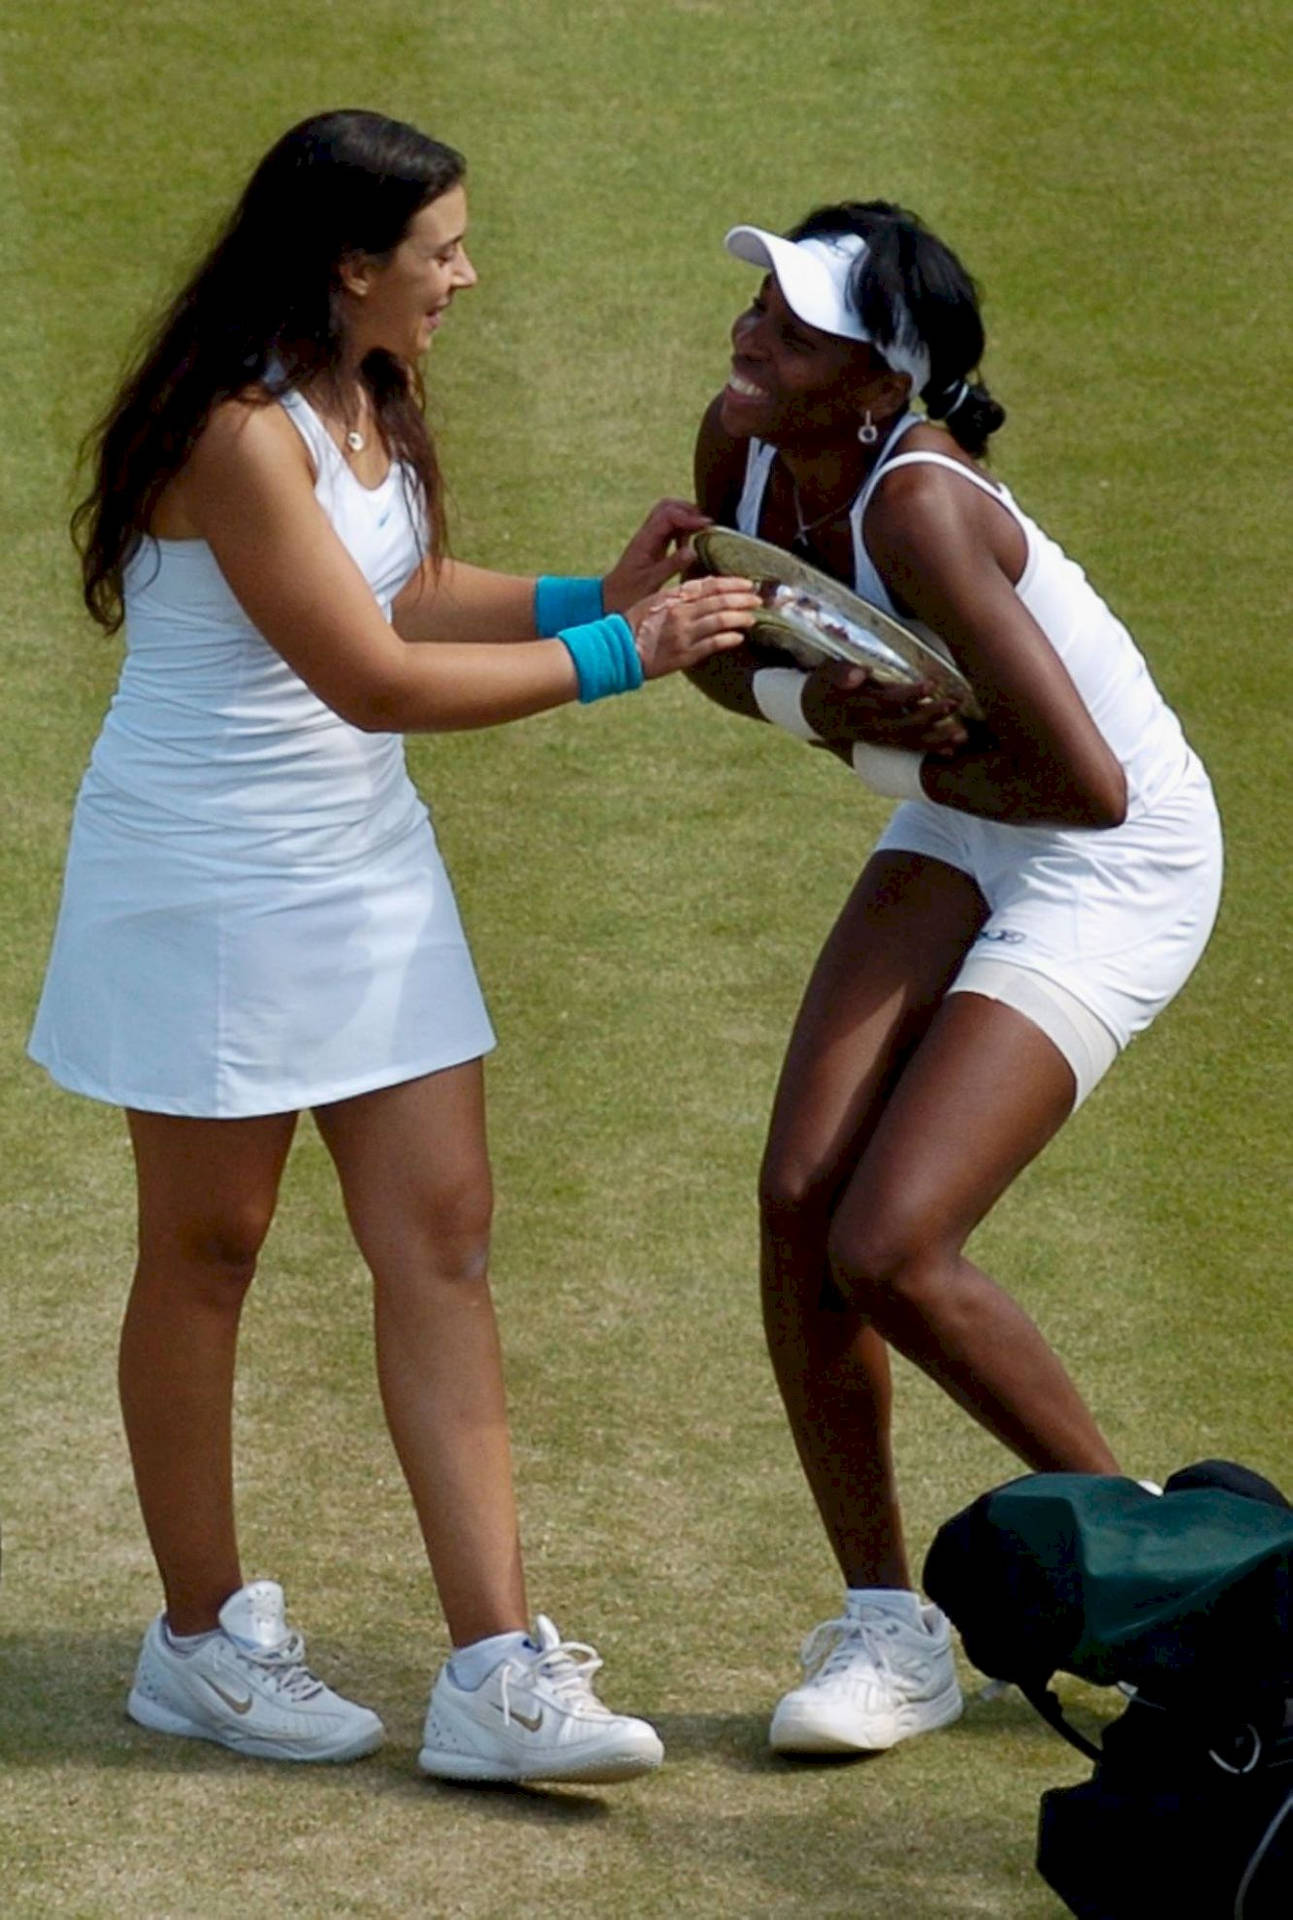 Marion Bartoli and Venus Williams during a tennis match. Wallpaper